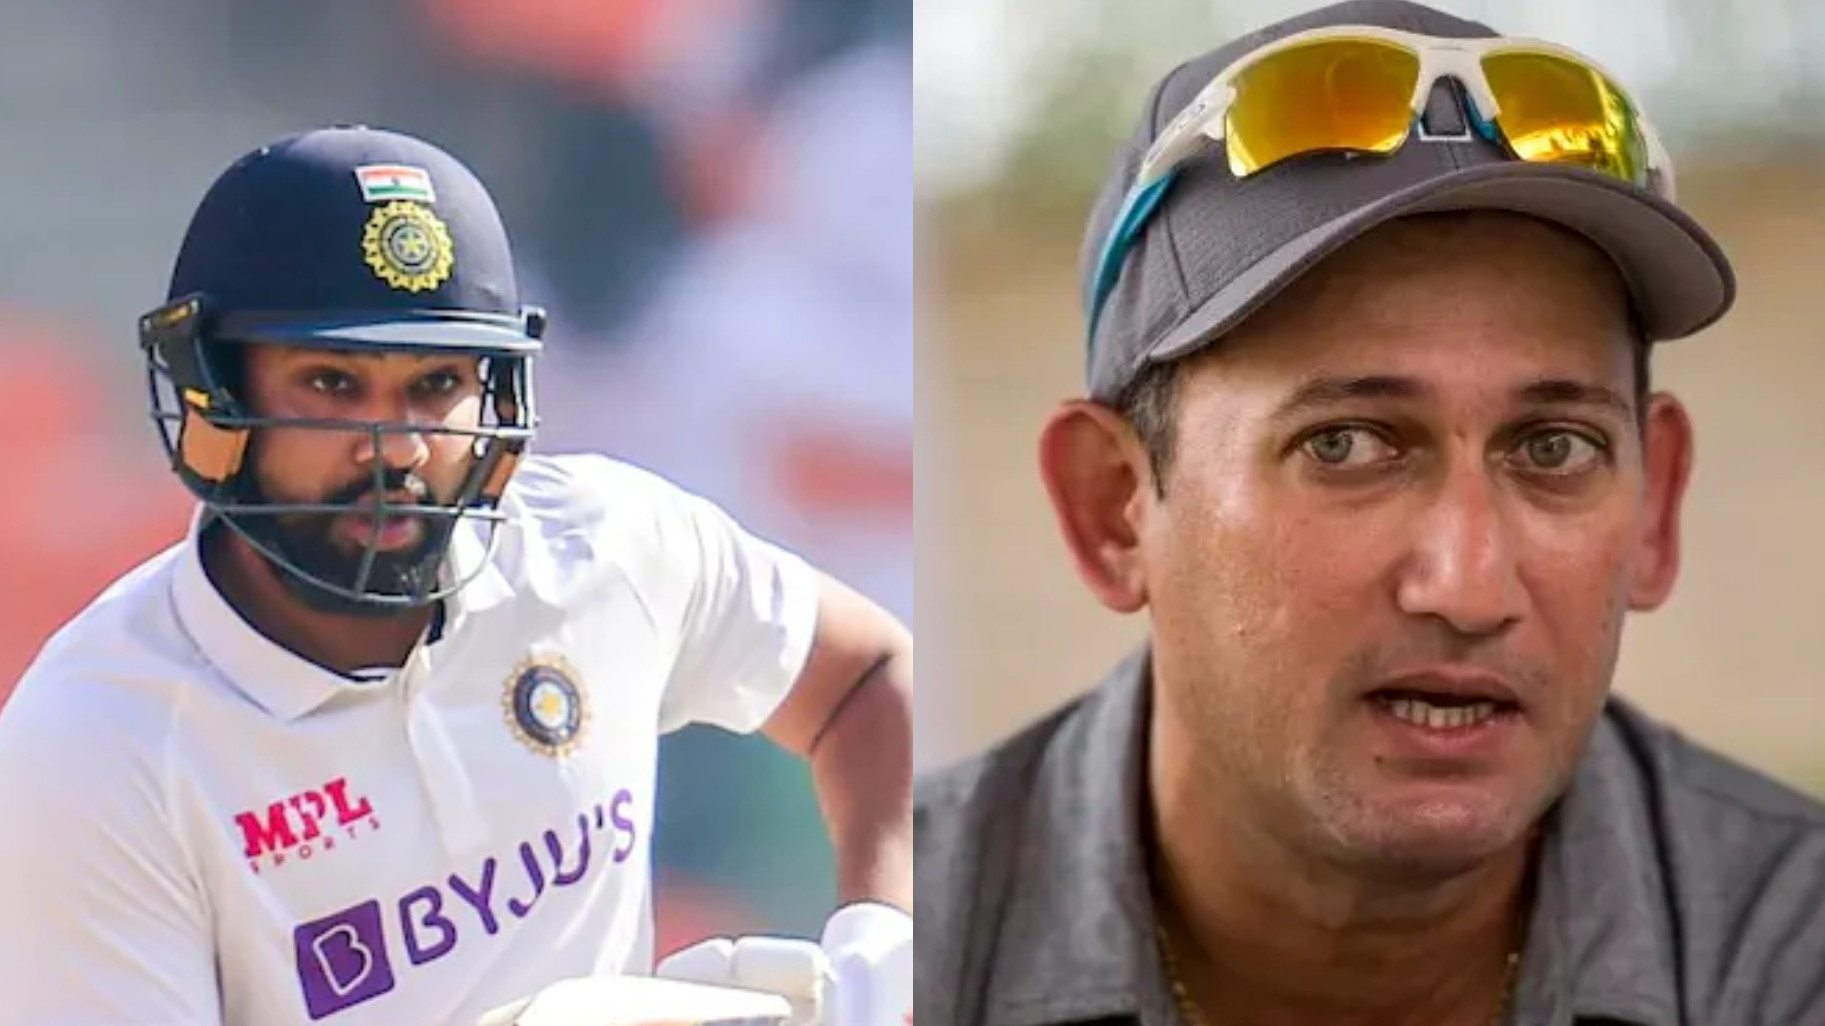 IND v SL 2022: Rohit Sharma will feel confident as Test captain- Ajit Agarkar says runs in England will help him lead